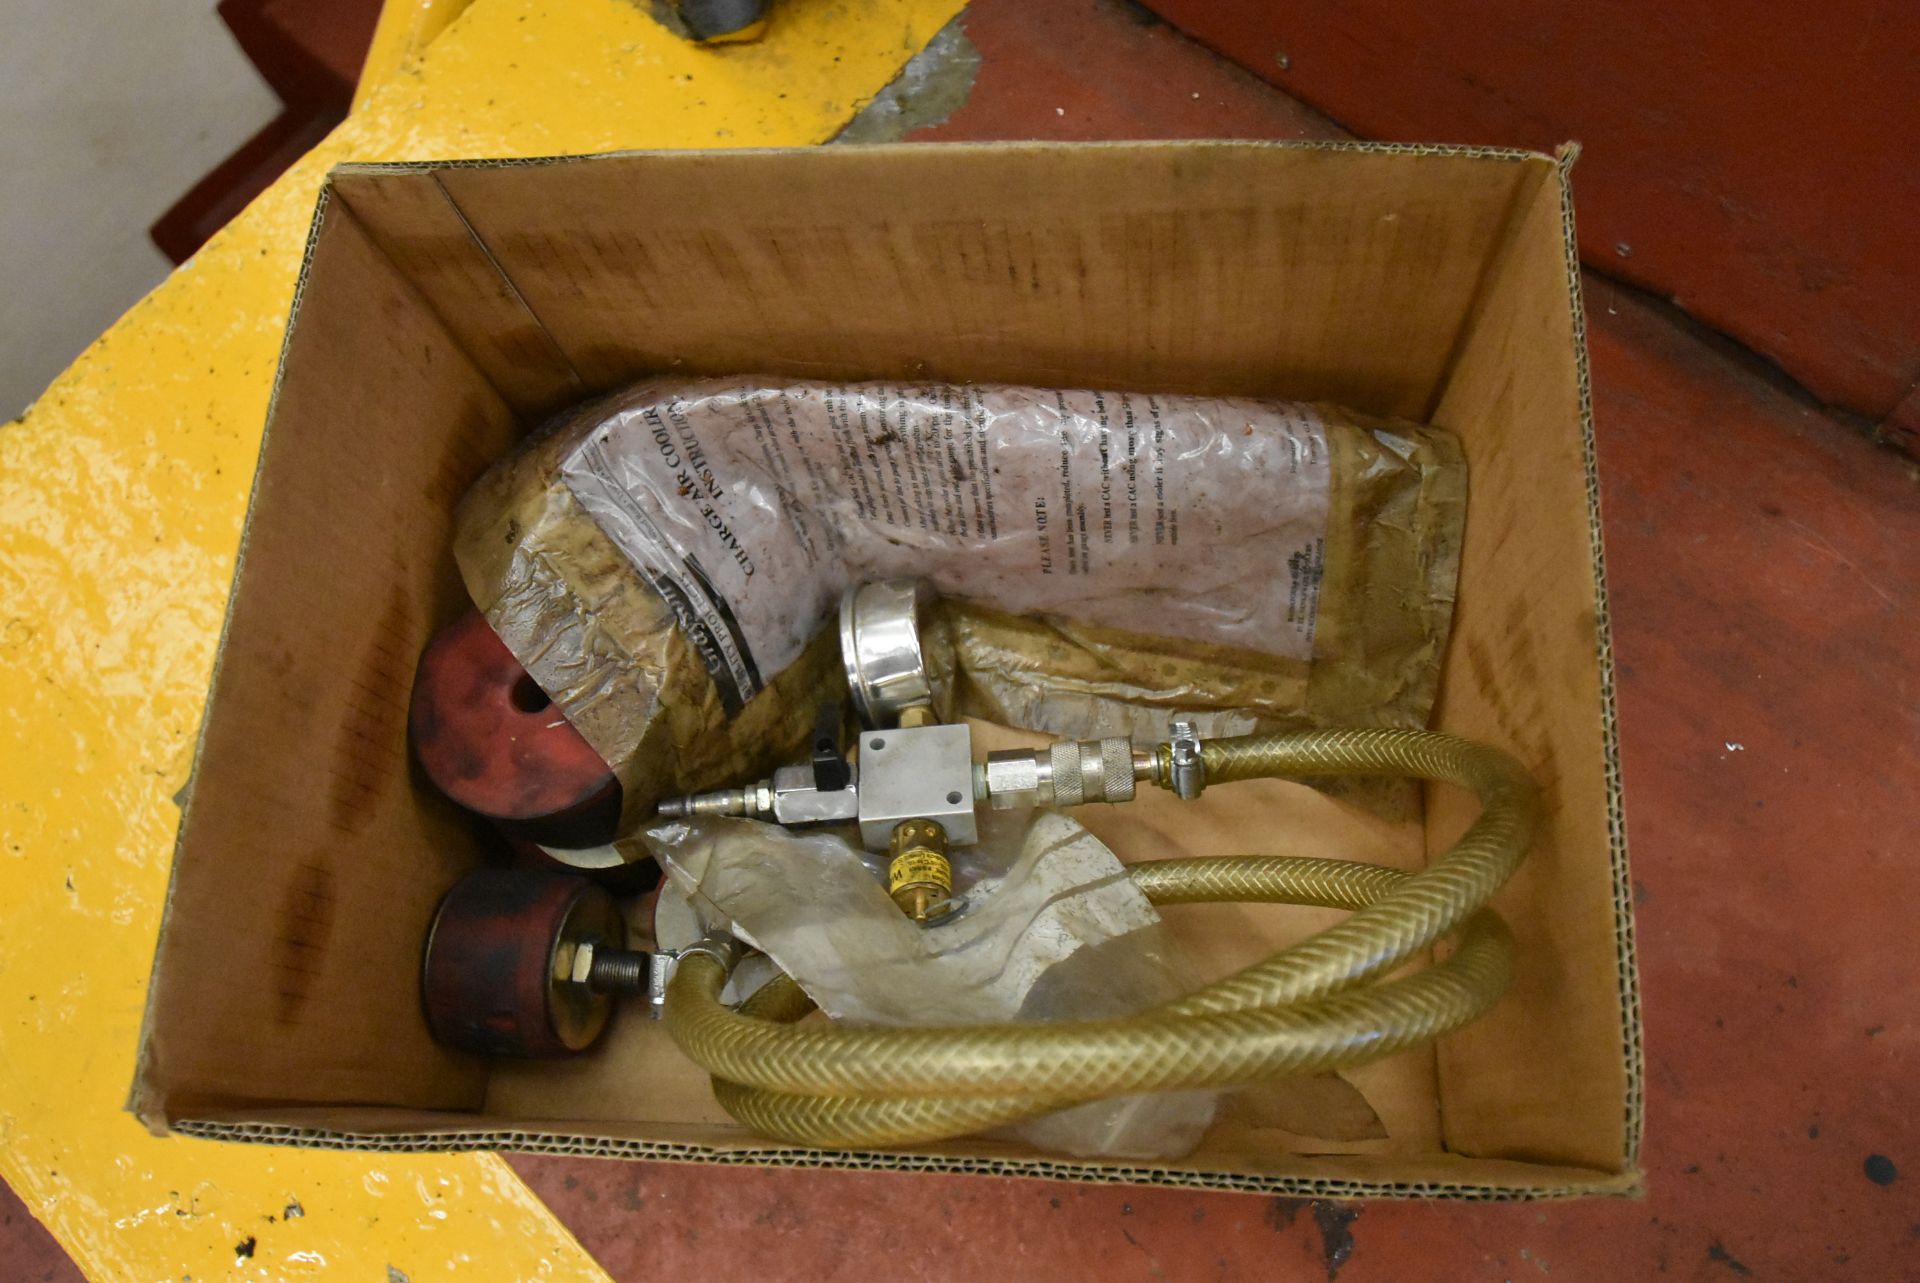 Oil Pressure Test Equipment, in cardboard box (Ple